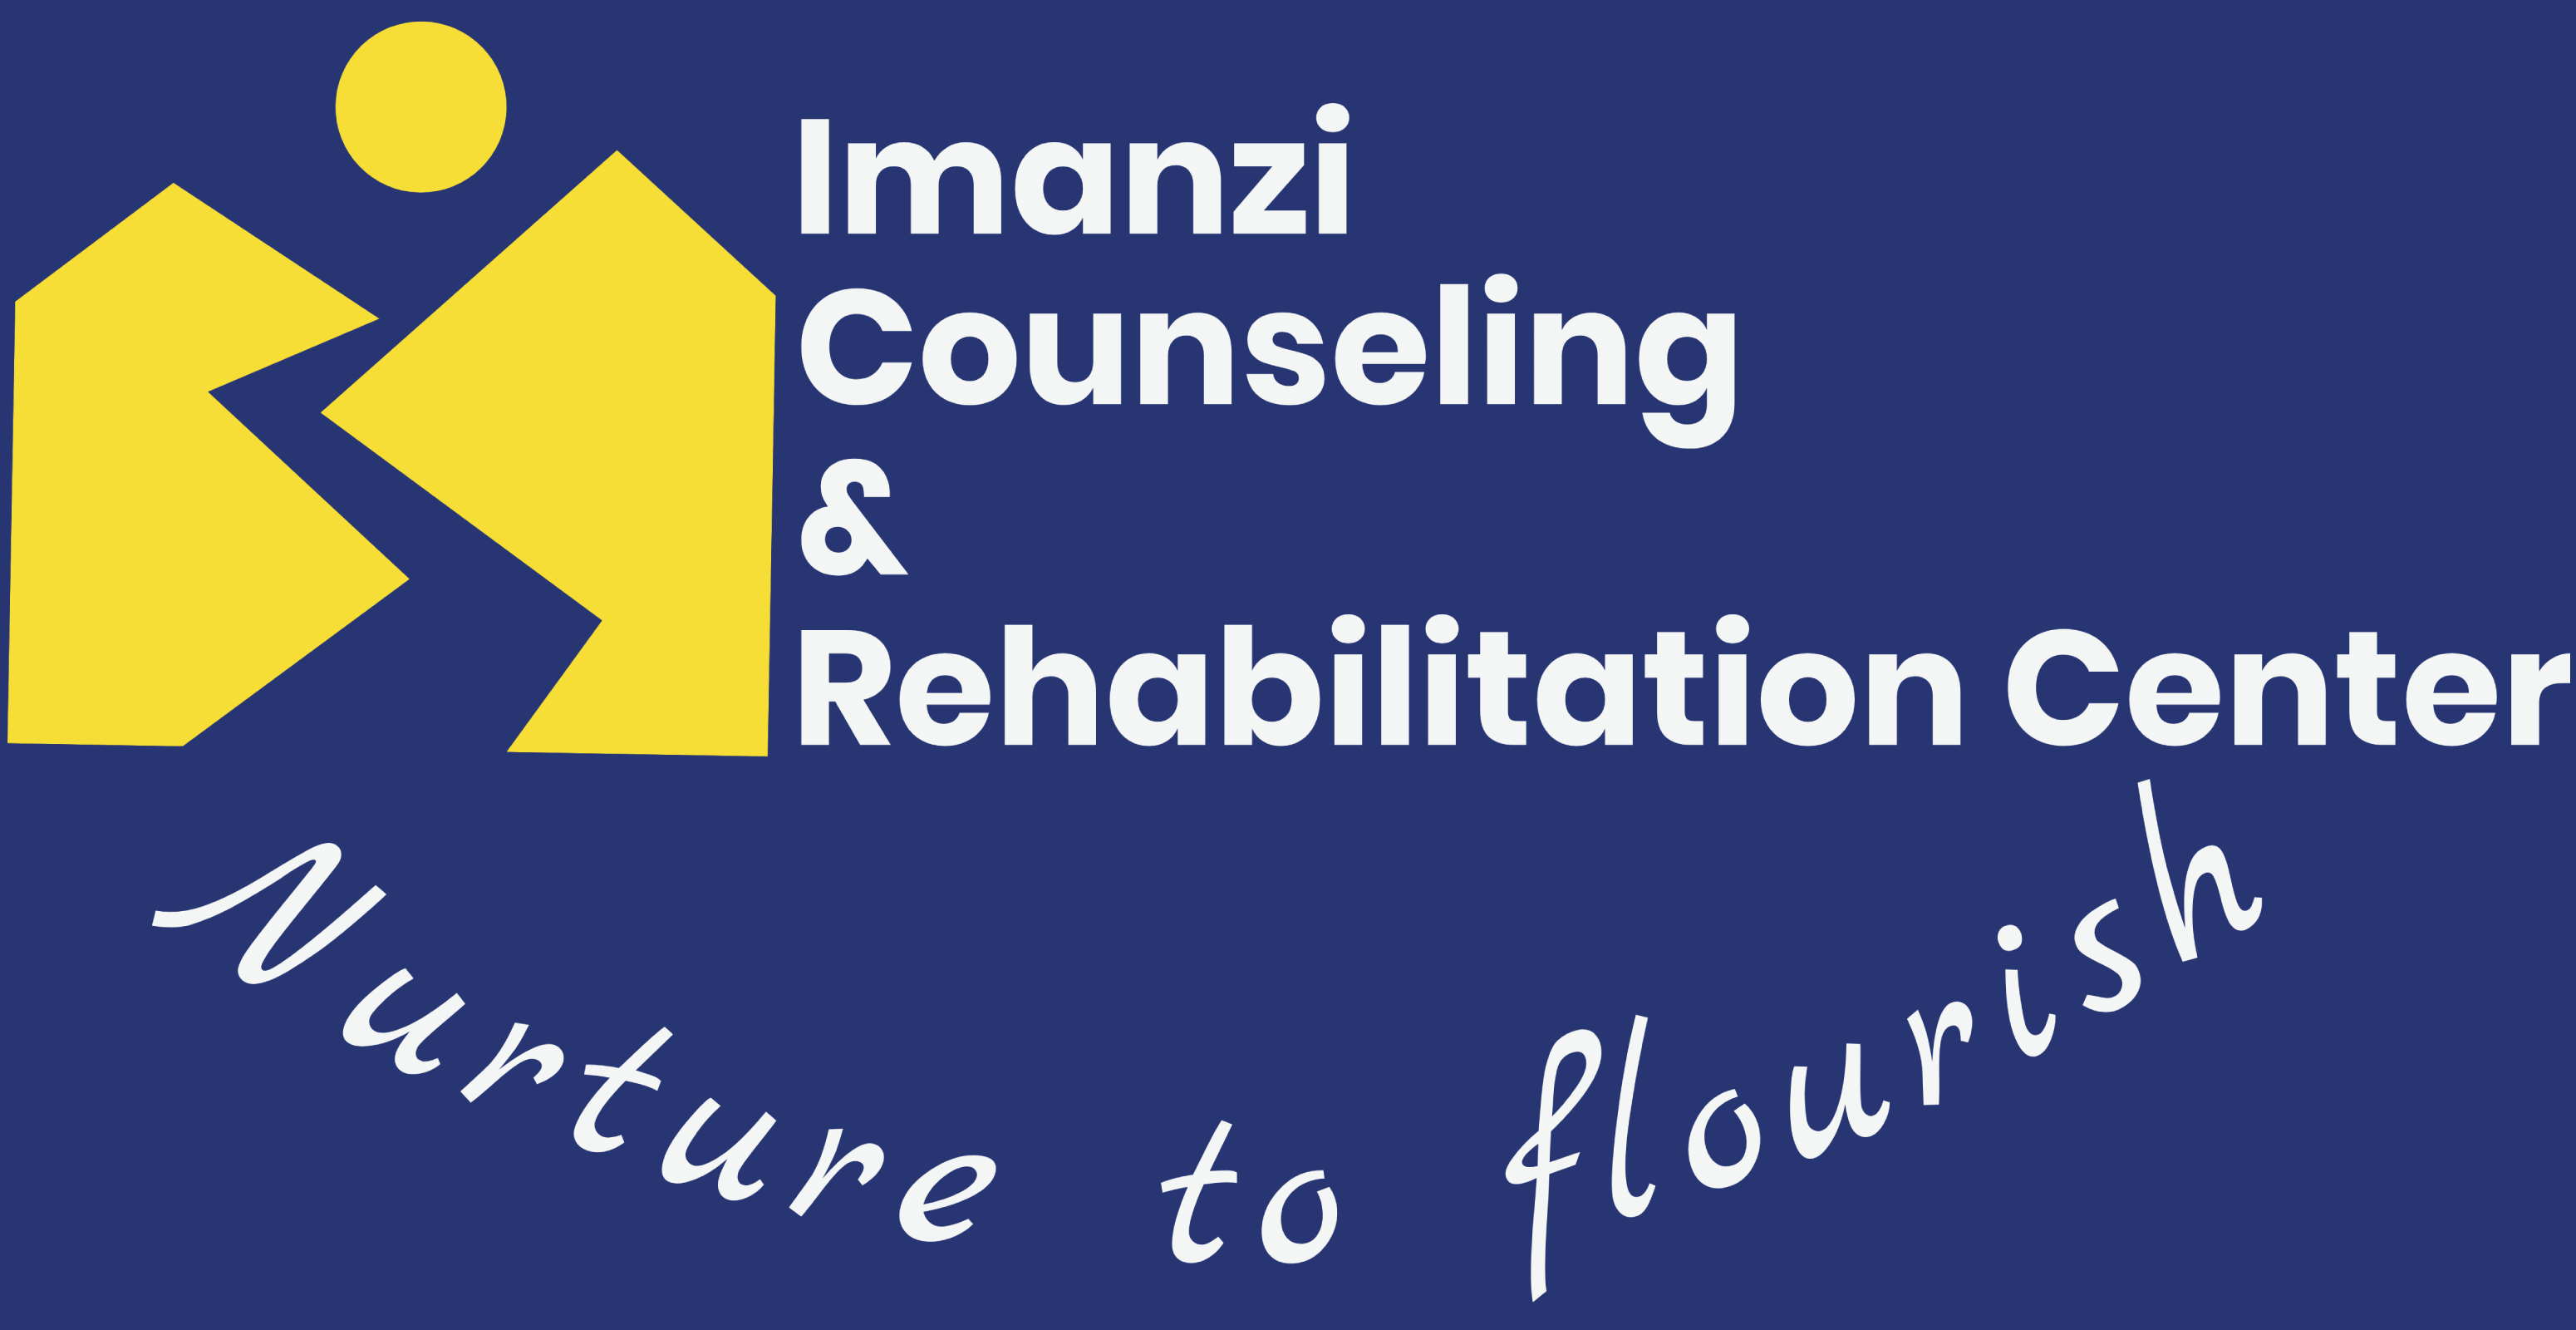 Imanzi Counseling & Rehabilitation Center